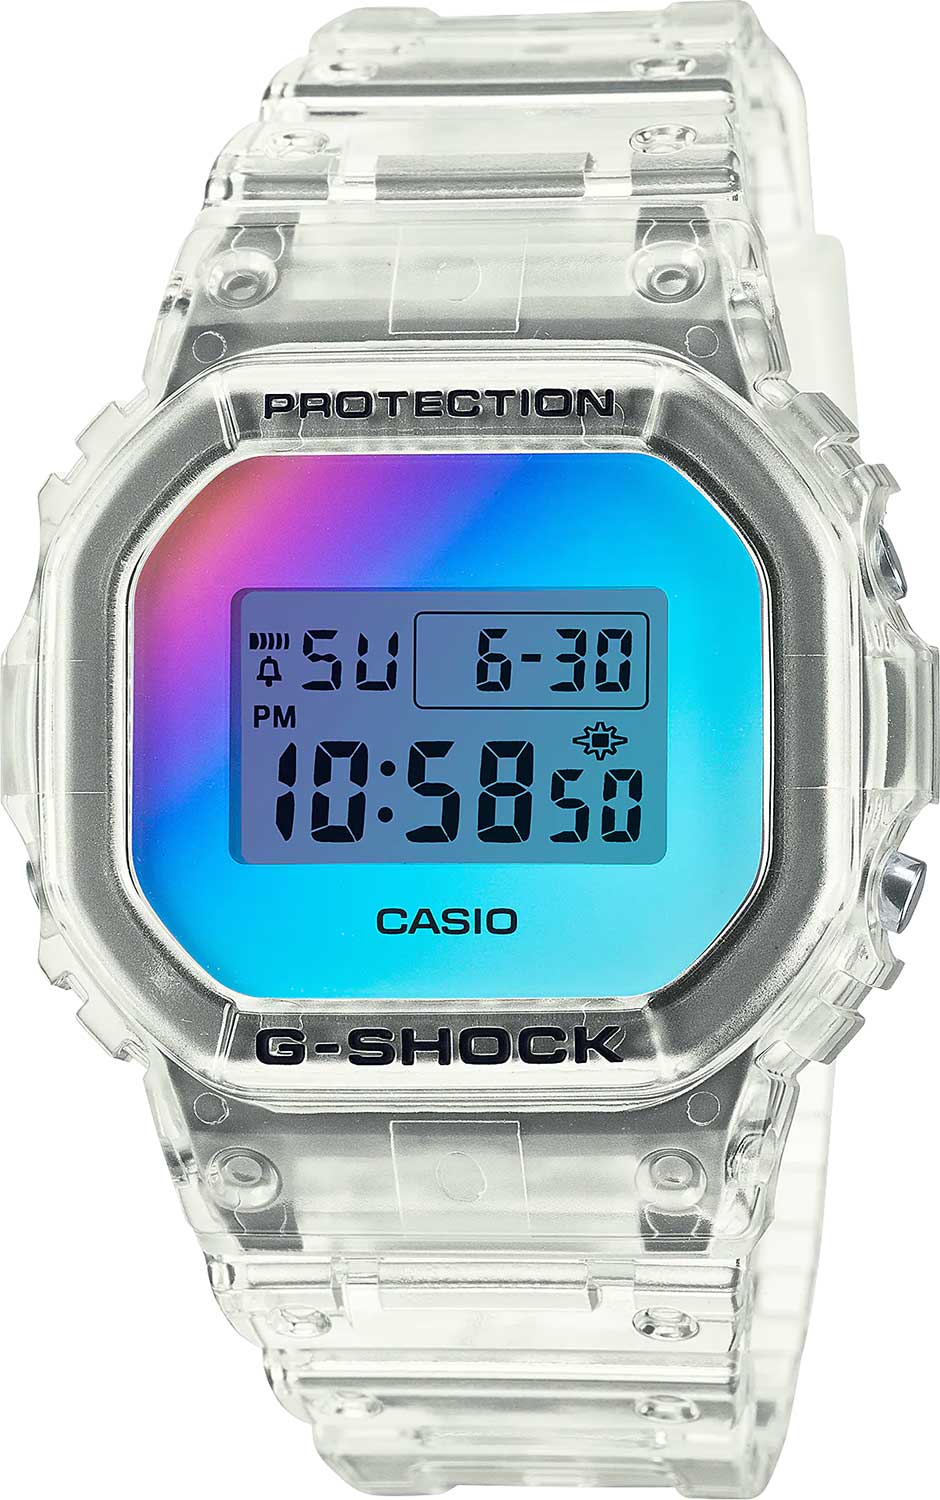    Casio G-SHOCK DW-5600SRS-7  